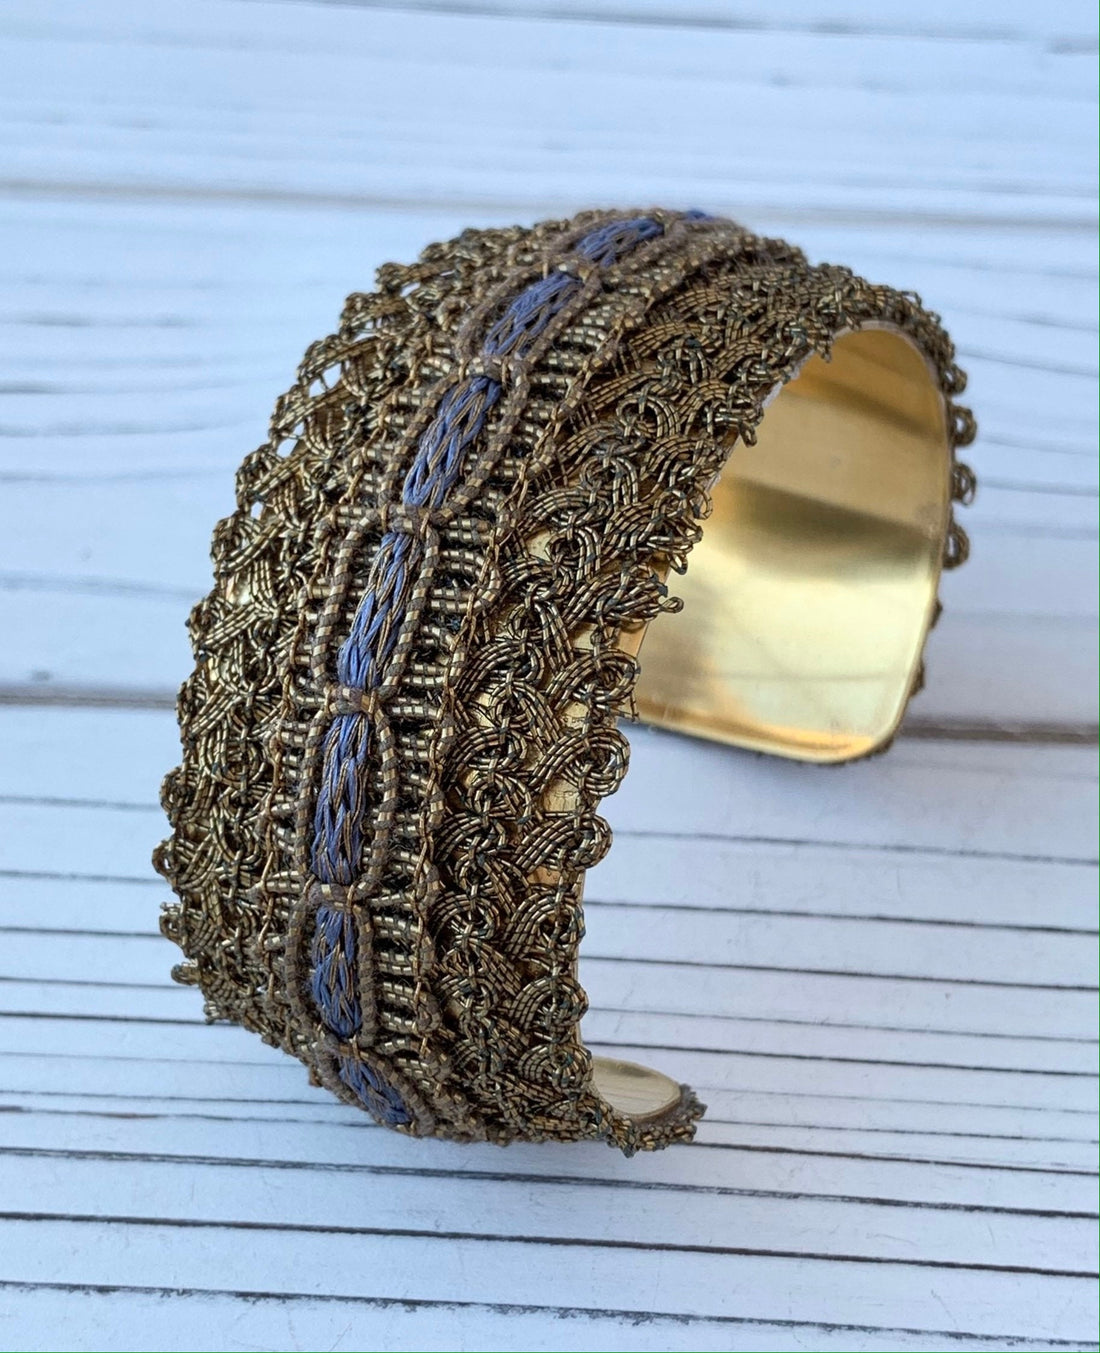 Lenora Dame Tudor Collection Cuff Bracelet in Violet